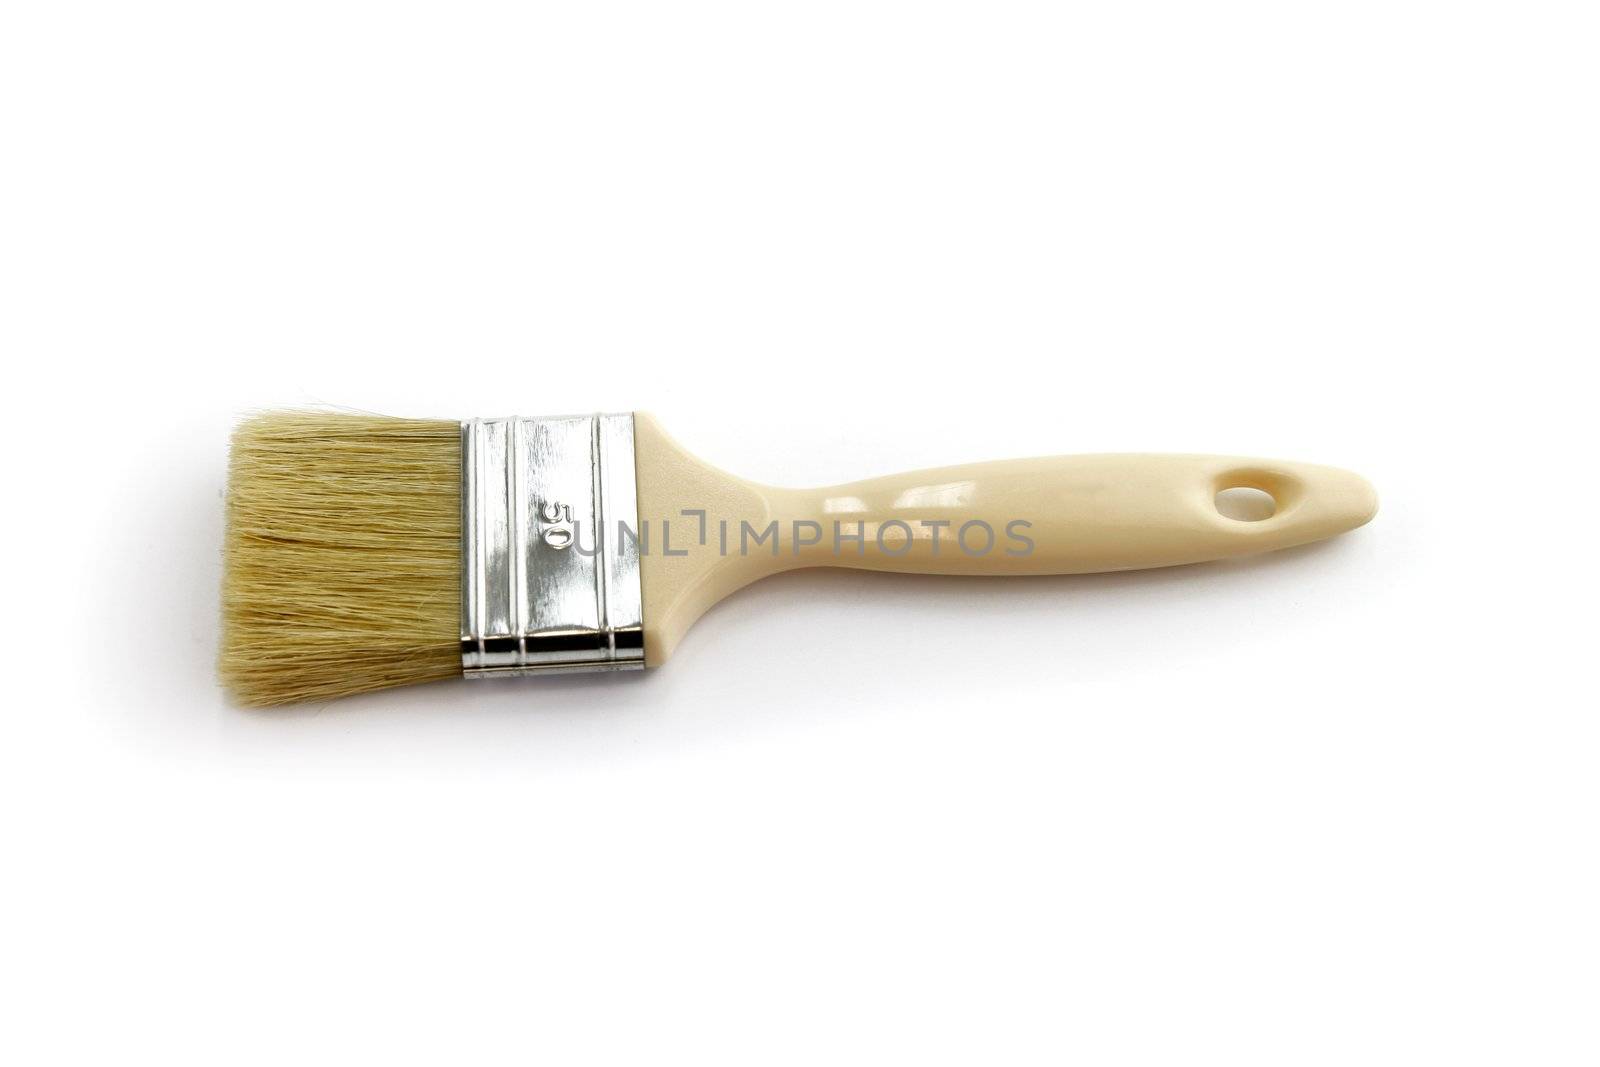 Clean paint brush by phovoir